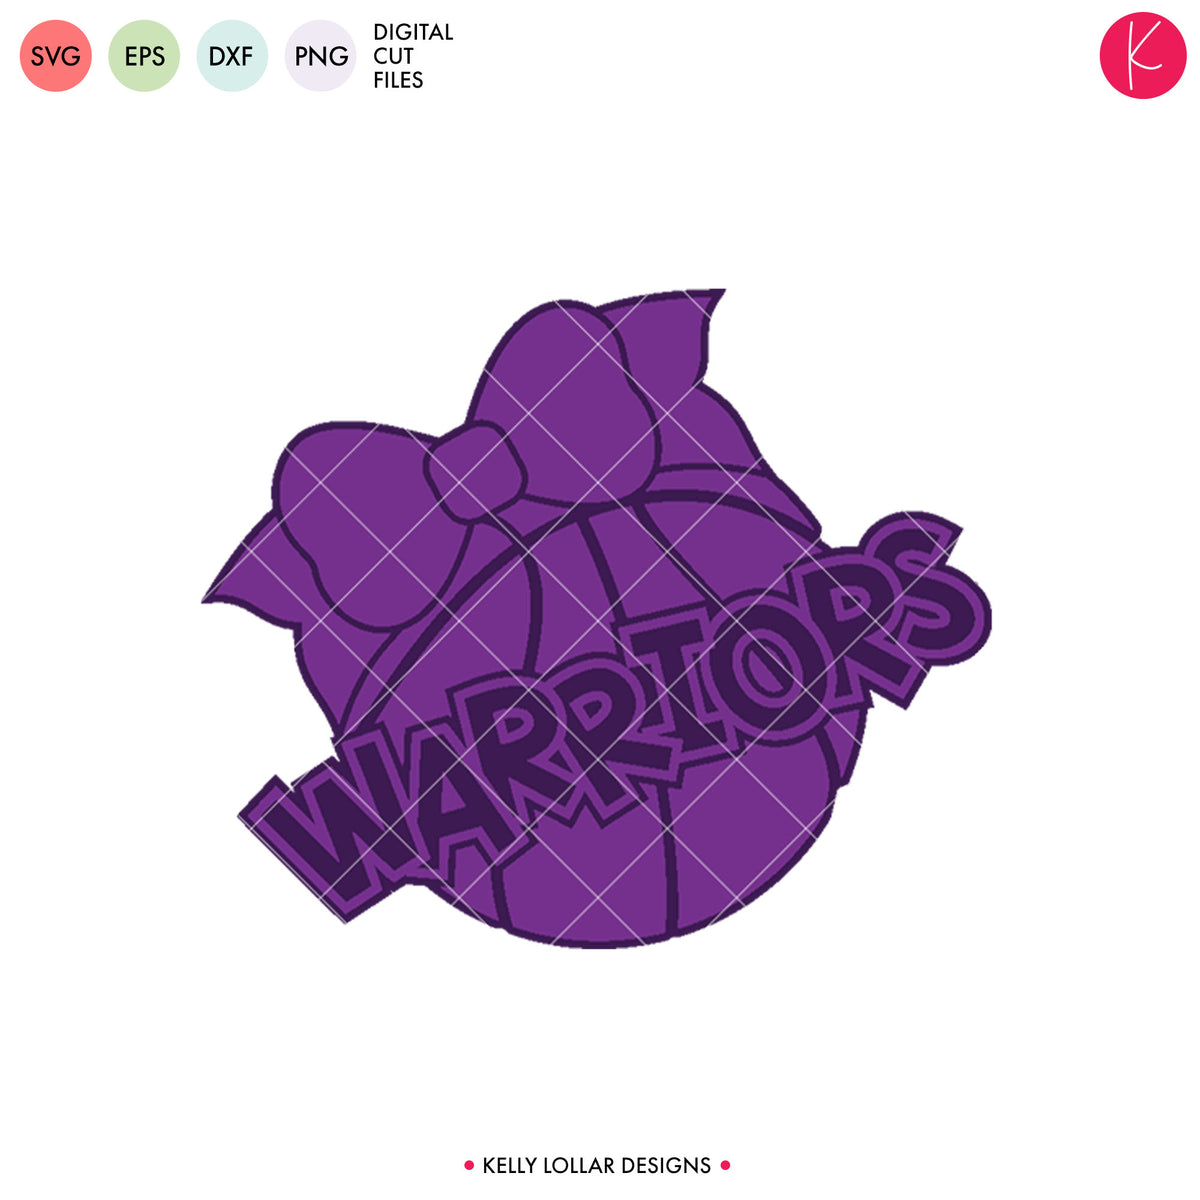 Warriors Basketball Bundle | SVG DXF EPS PNG Cut Files